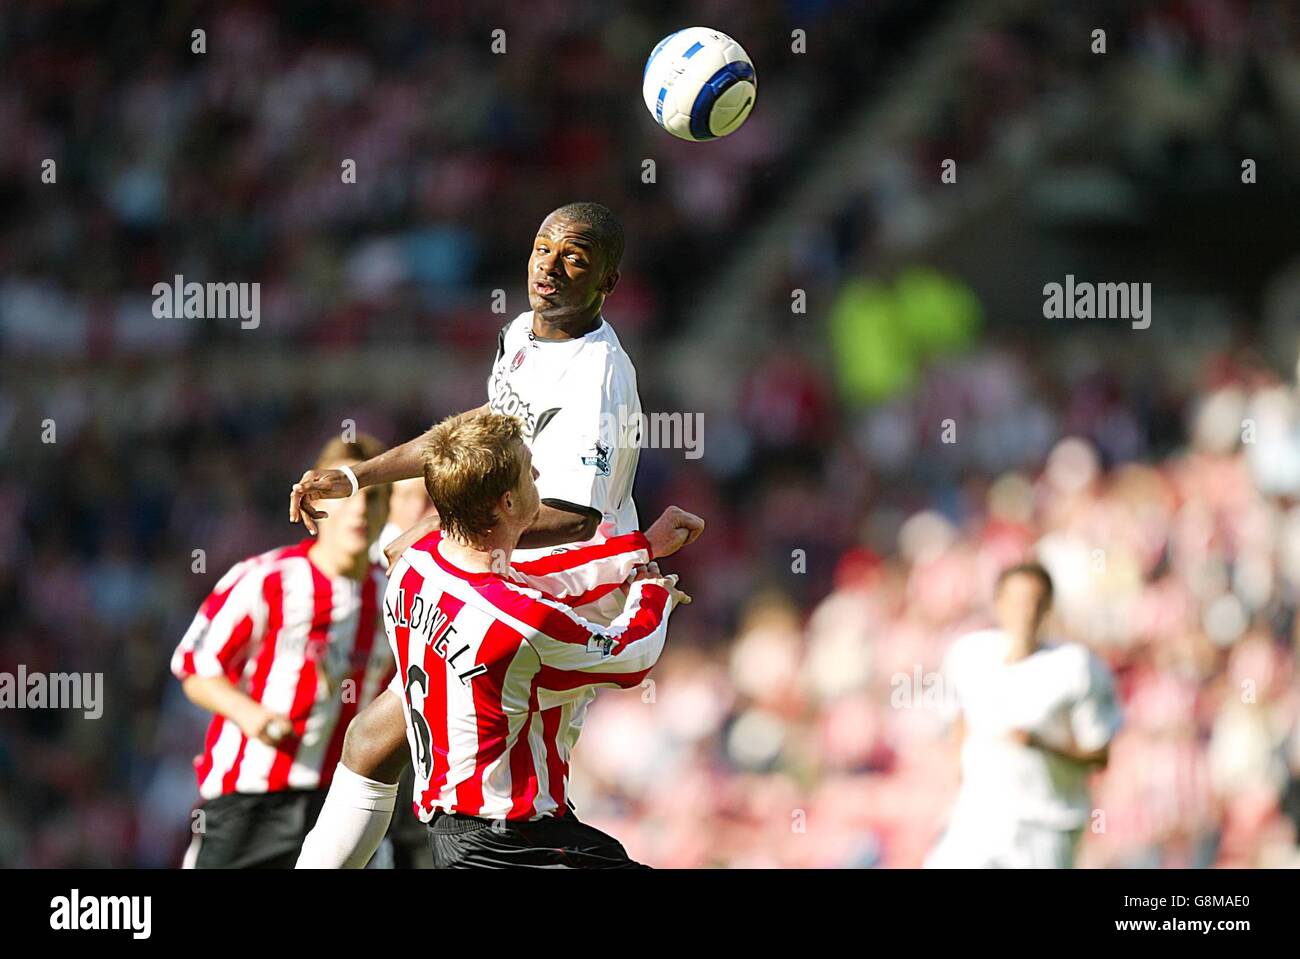 Charlton Athletic's Darren Bent wins the ball above Sunderland's Stephen Caldwell Stock Photo